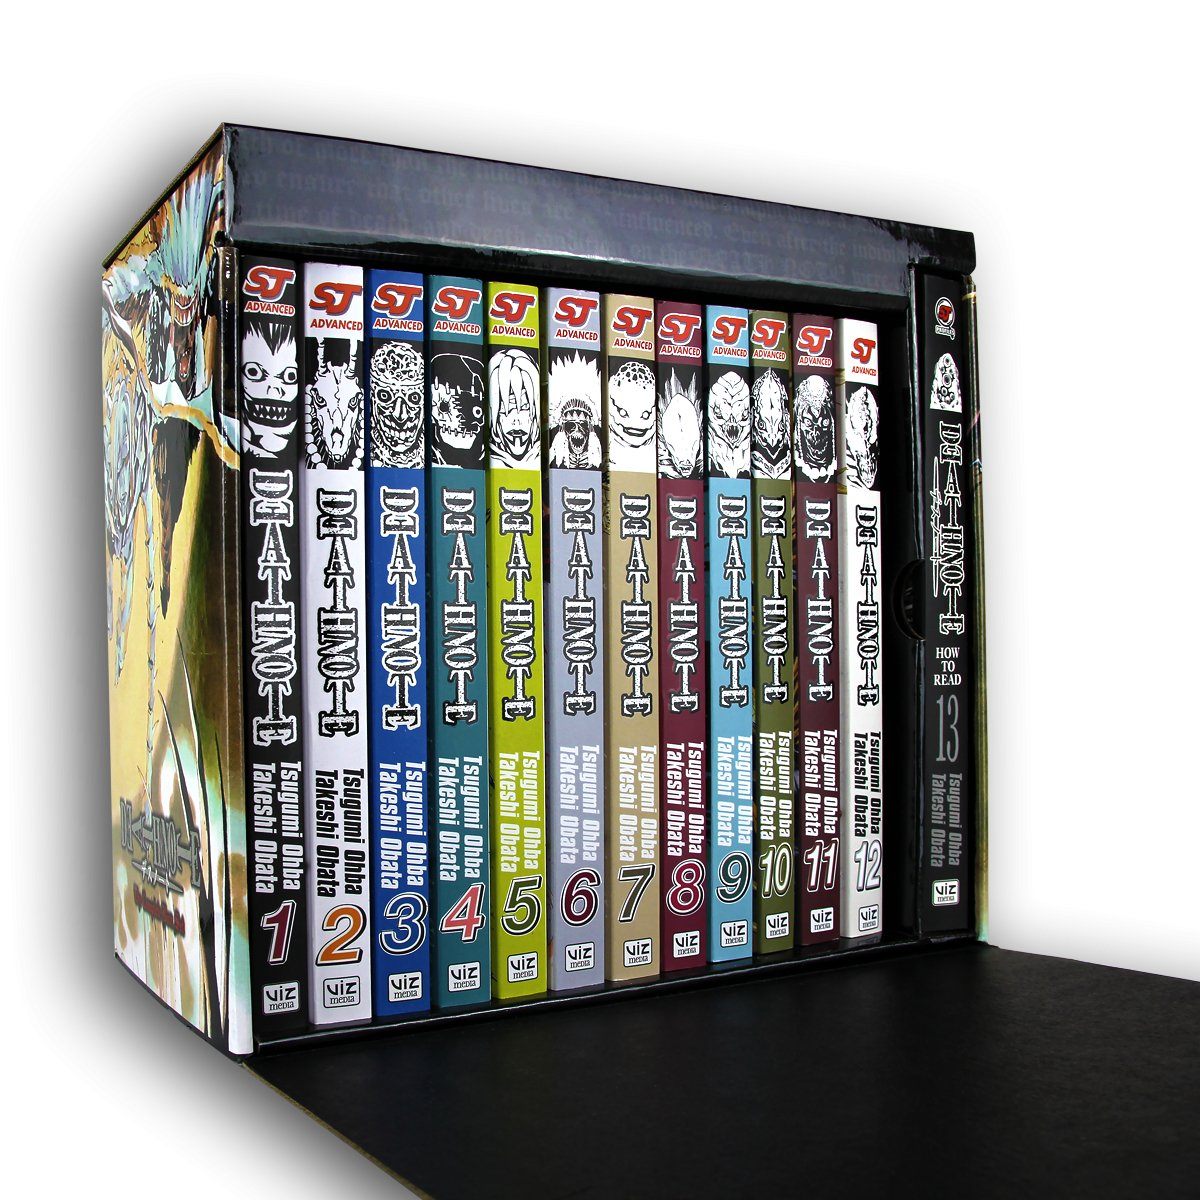 Death Note: The Complete Box Set by Tsugumi Ohba & Takeshi Obata: Books 1-13 - Manga - Paperback